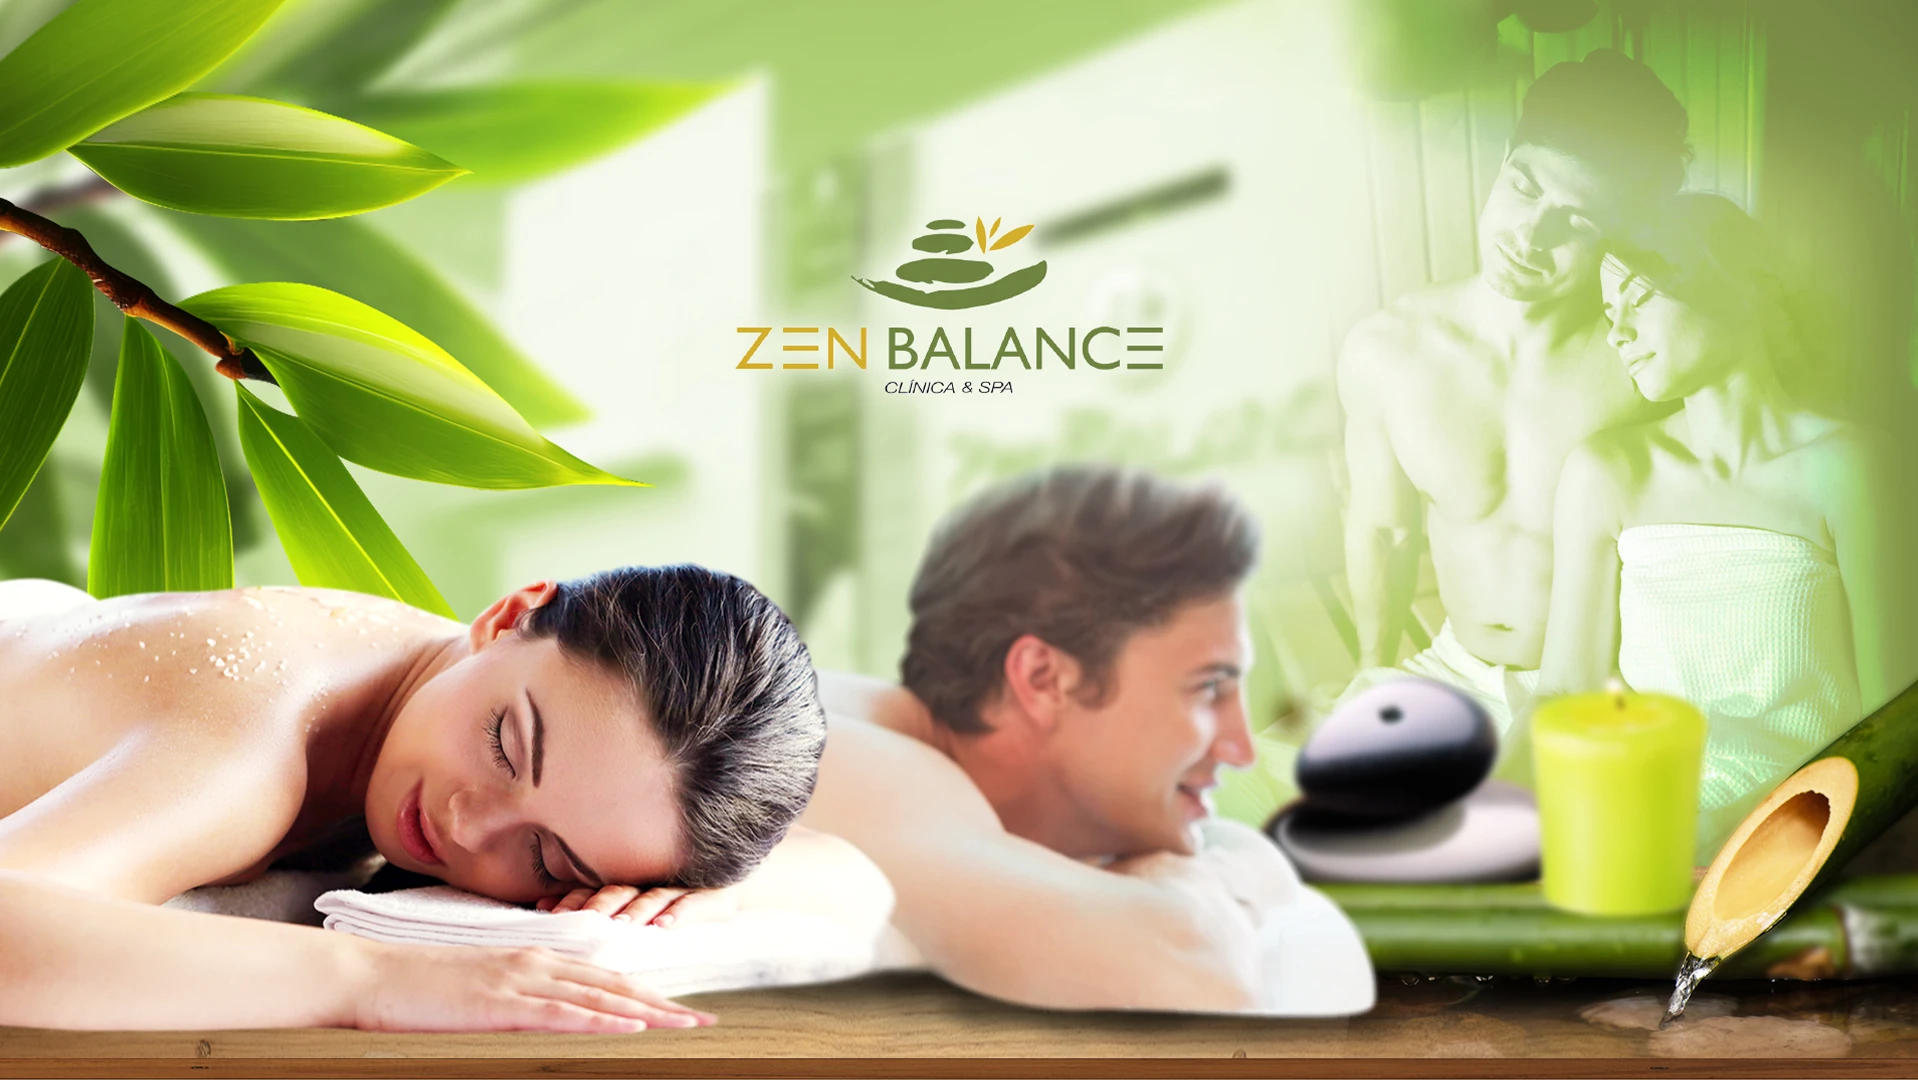 Zen Balance Clinica y Spa